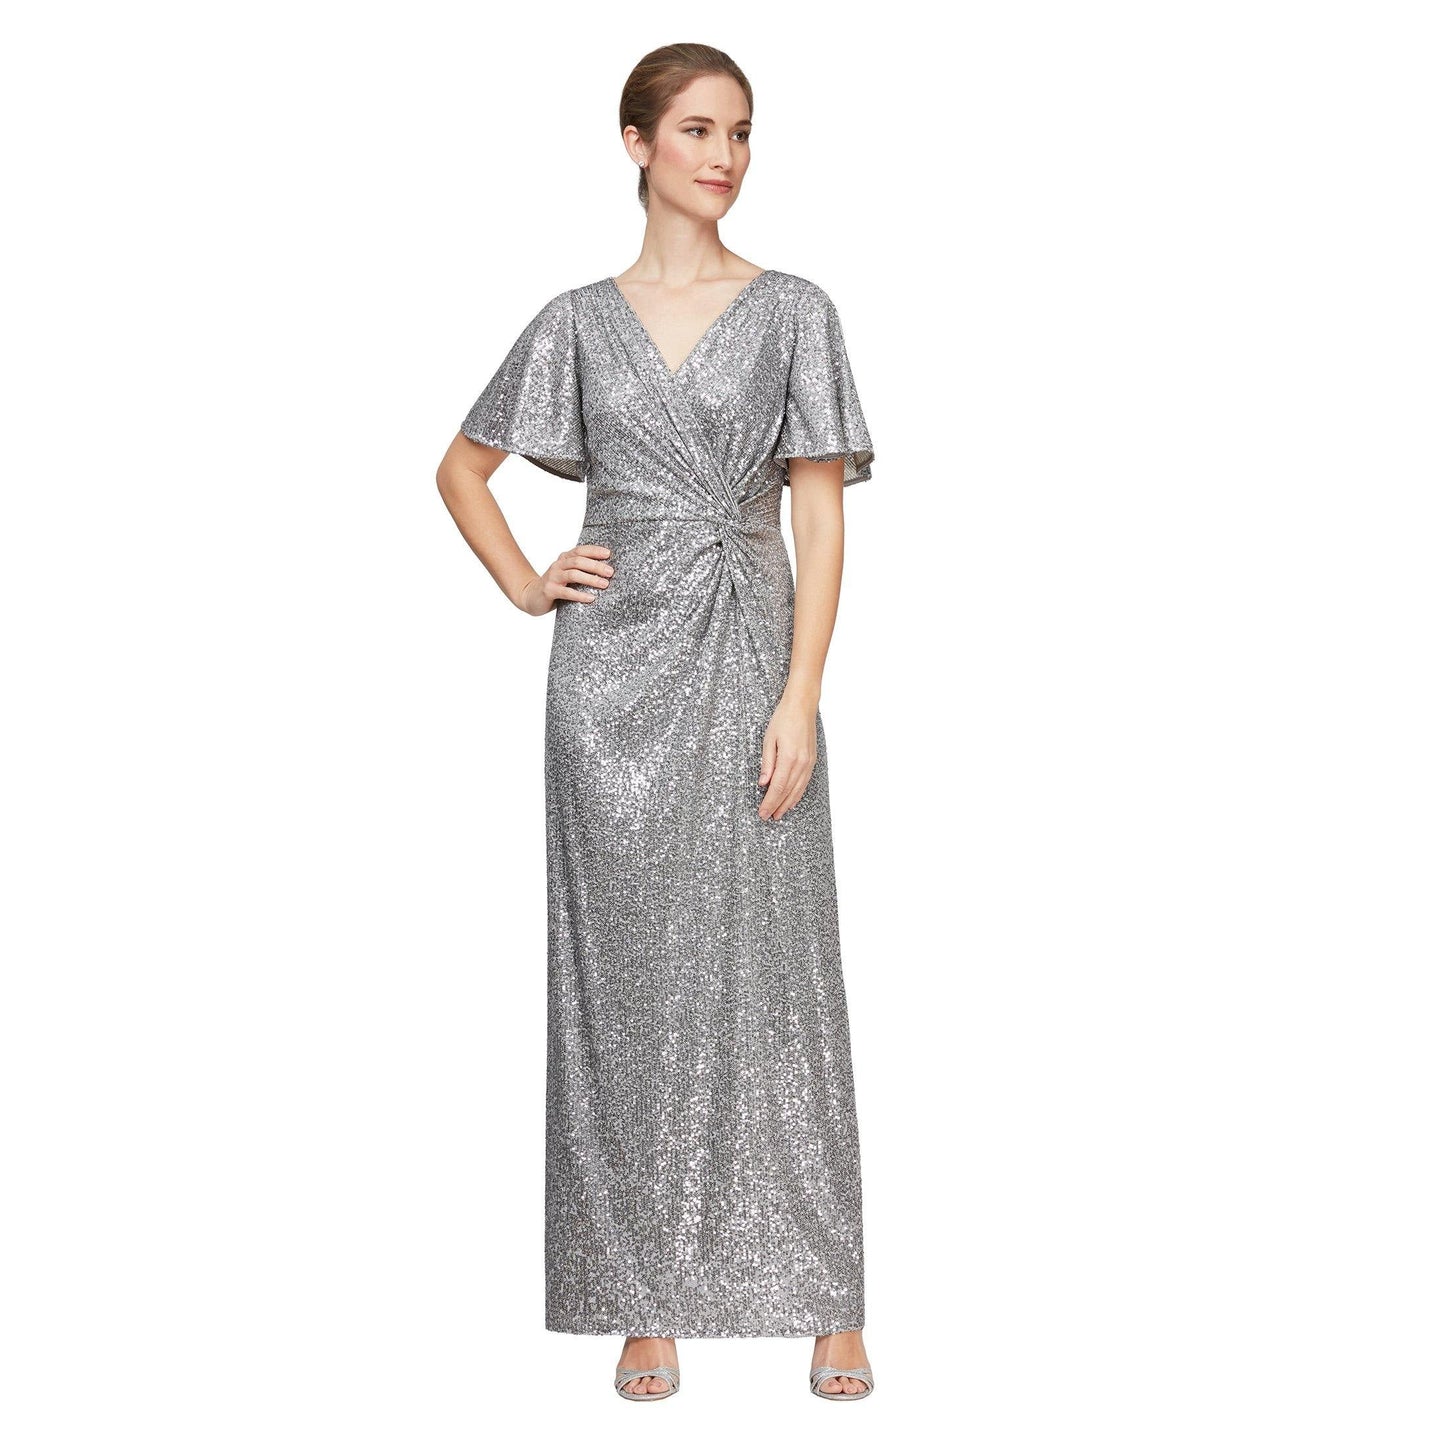 Alex Evenings Long Silver Formal Dress 8196677 - The Dress Outlet